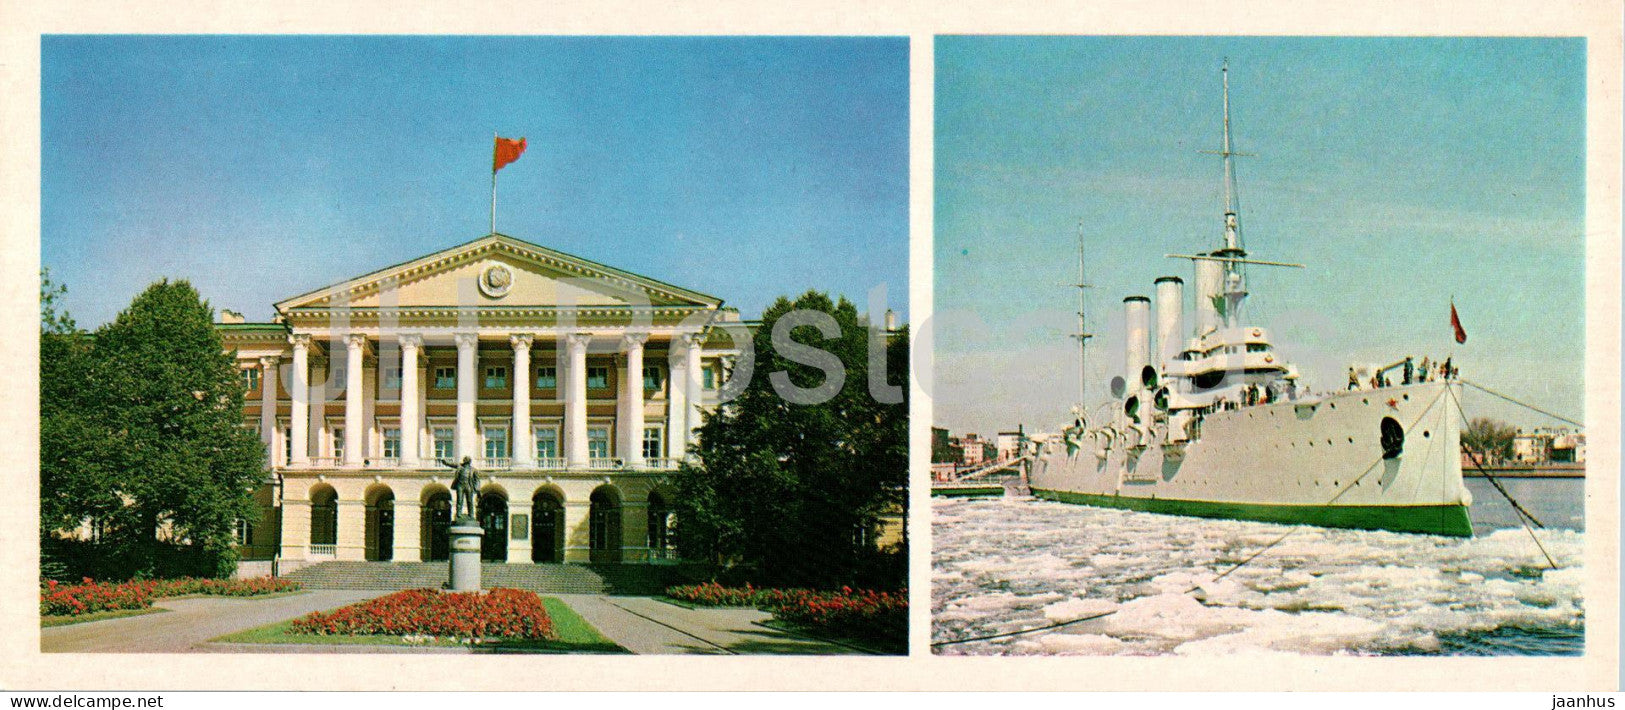 Leningrad - St Petersburg - Smolny - cruiser Aurora - ship - warship - 1980 - Russia USSR - unused - JH Postcards